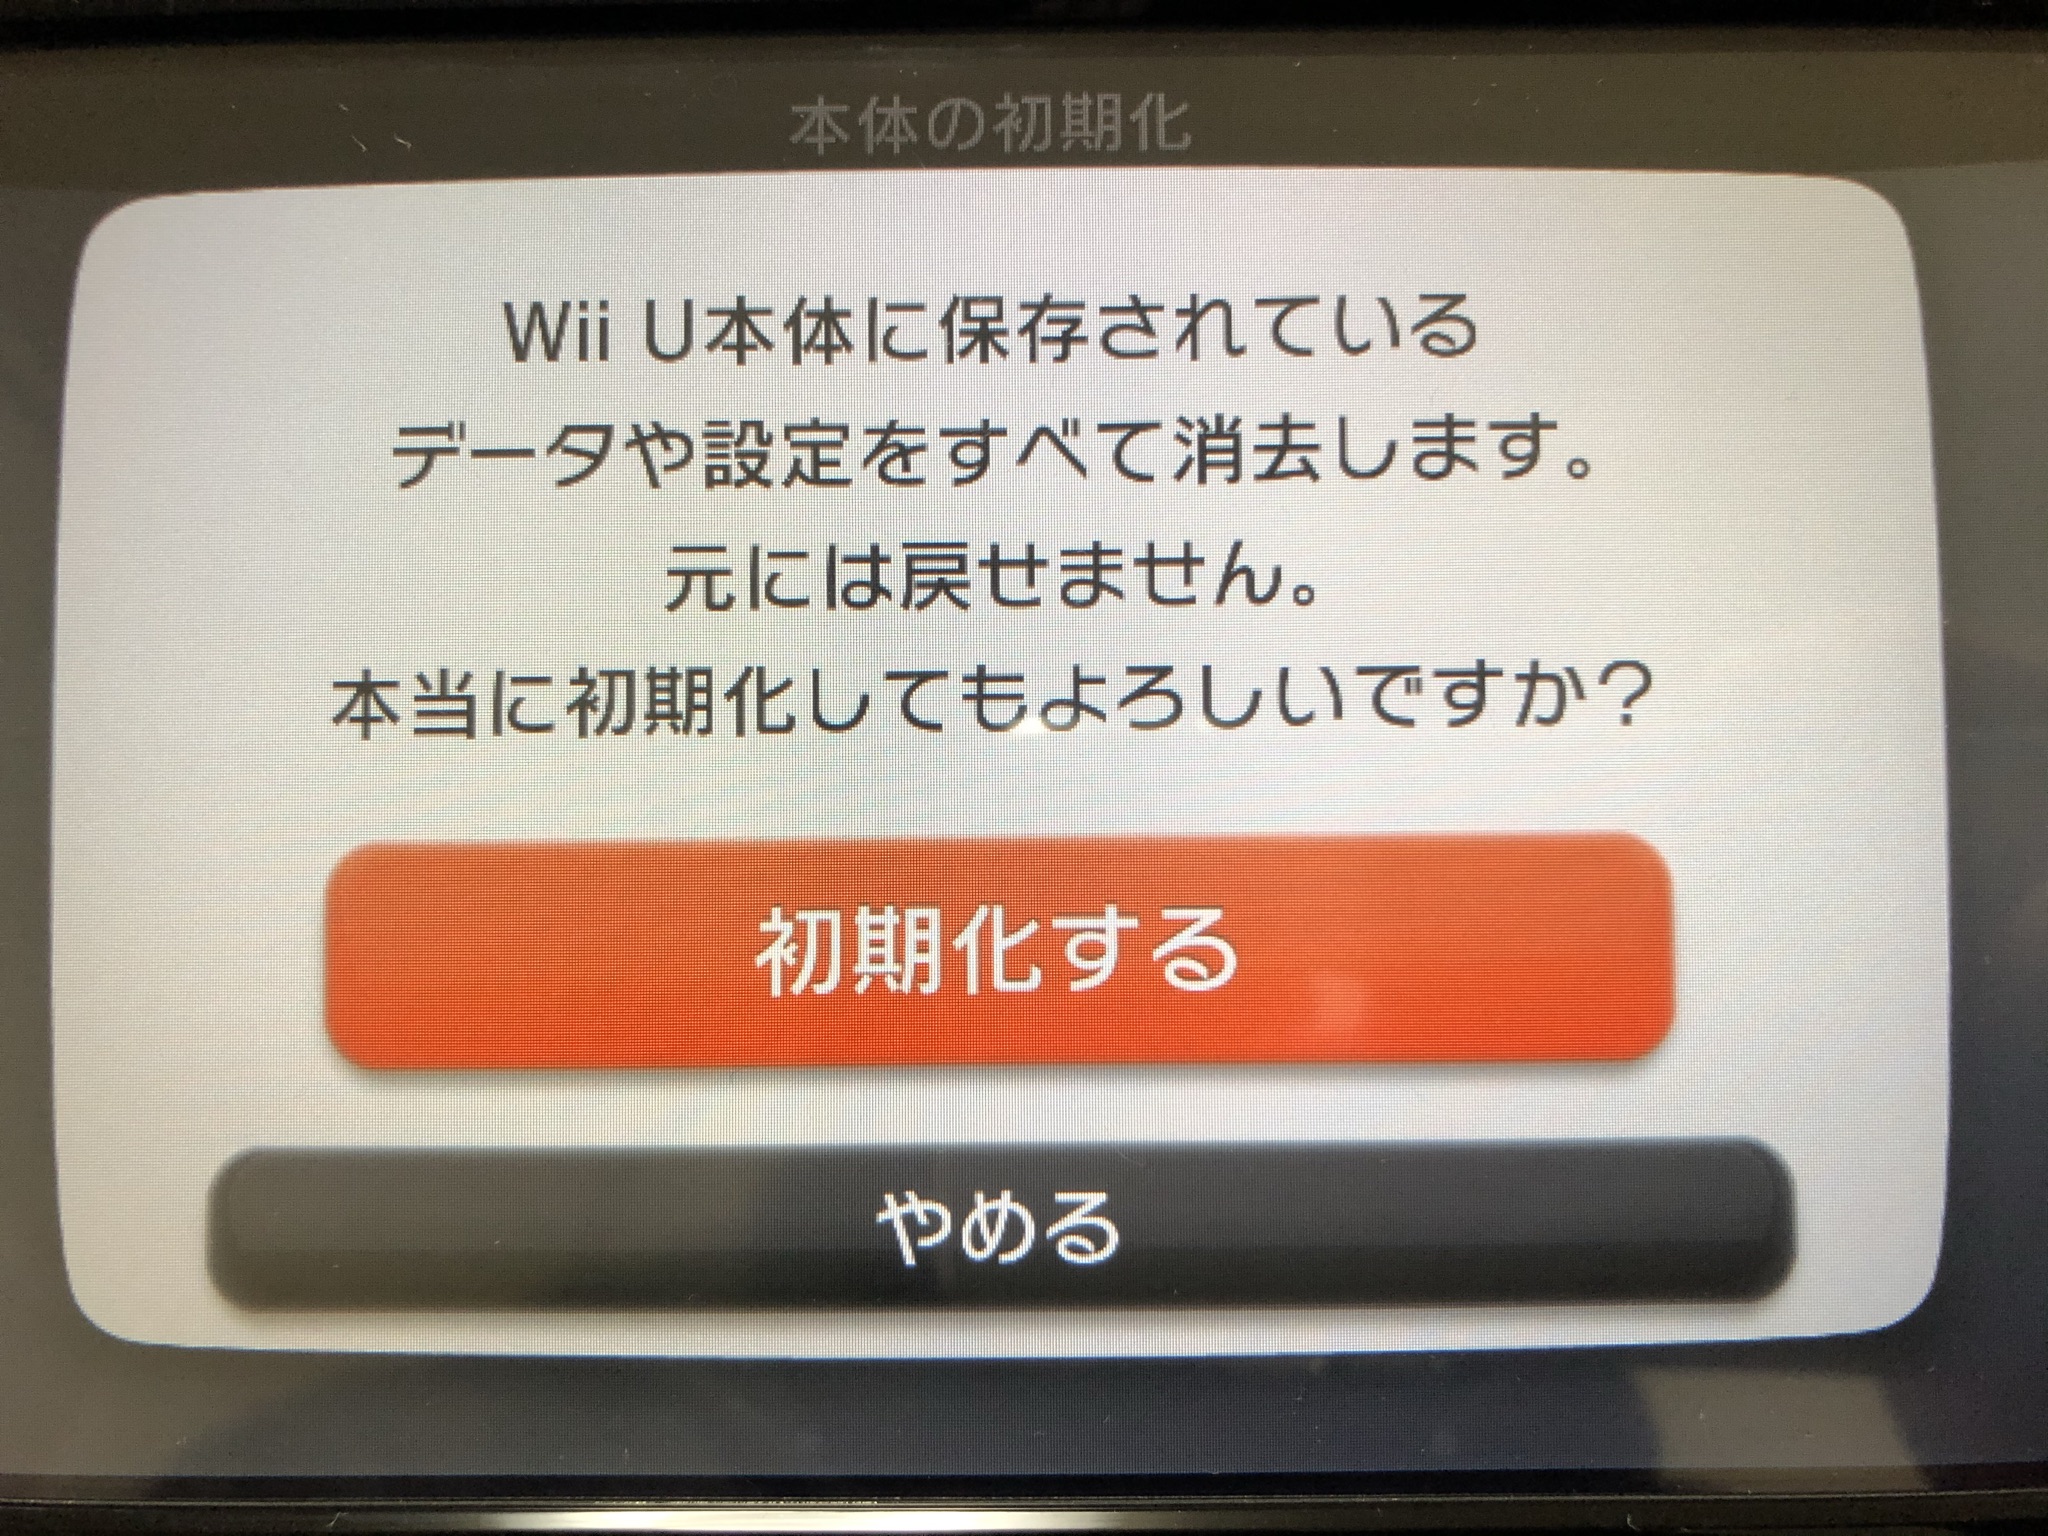 Wiiu 本体 売る 買取のおすすめ方法 相場 注意点について れとろとろ ゲームブログ